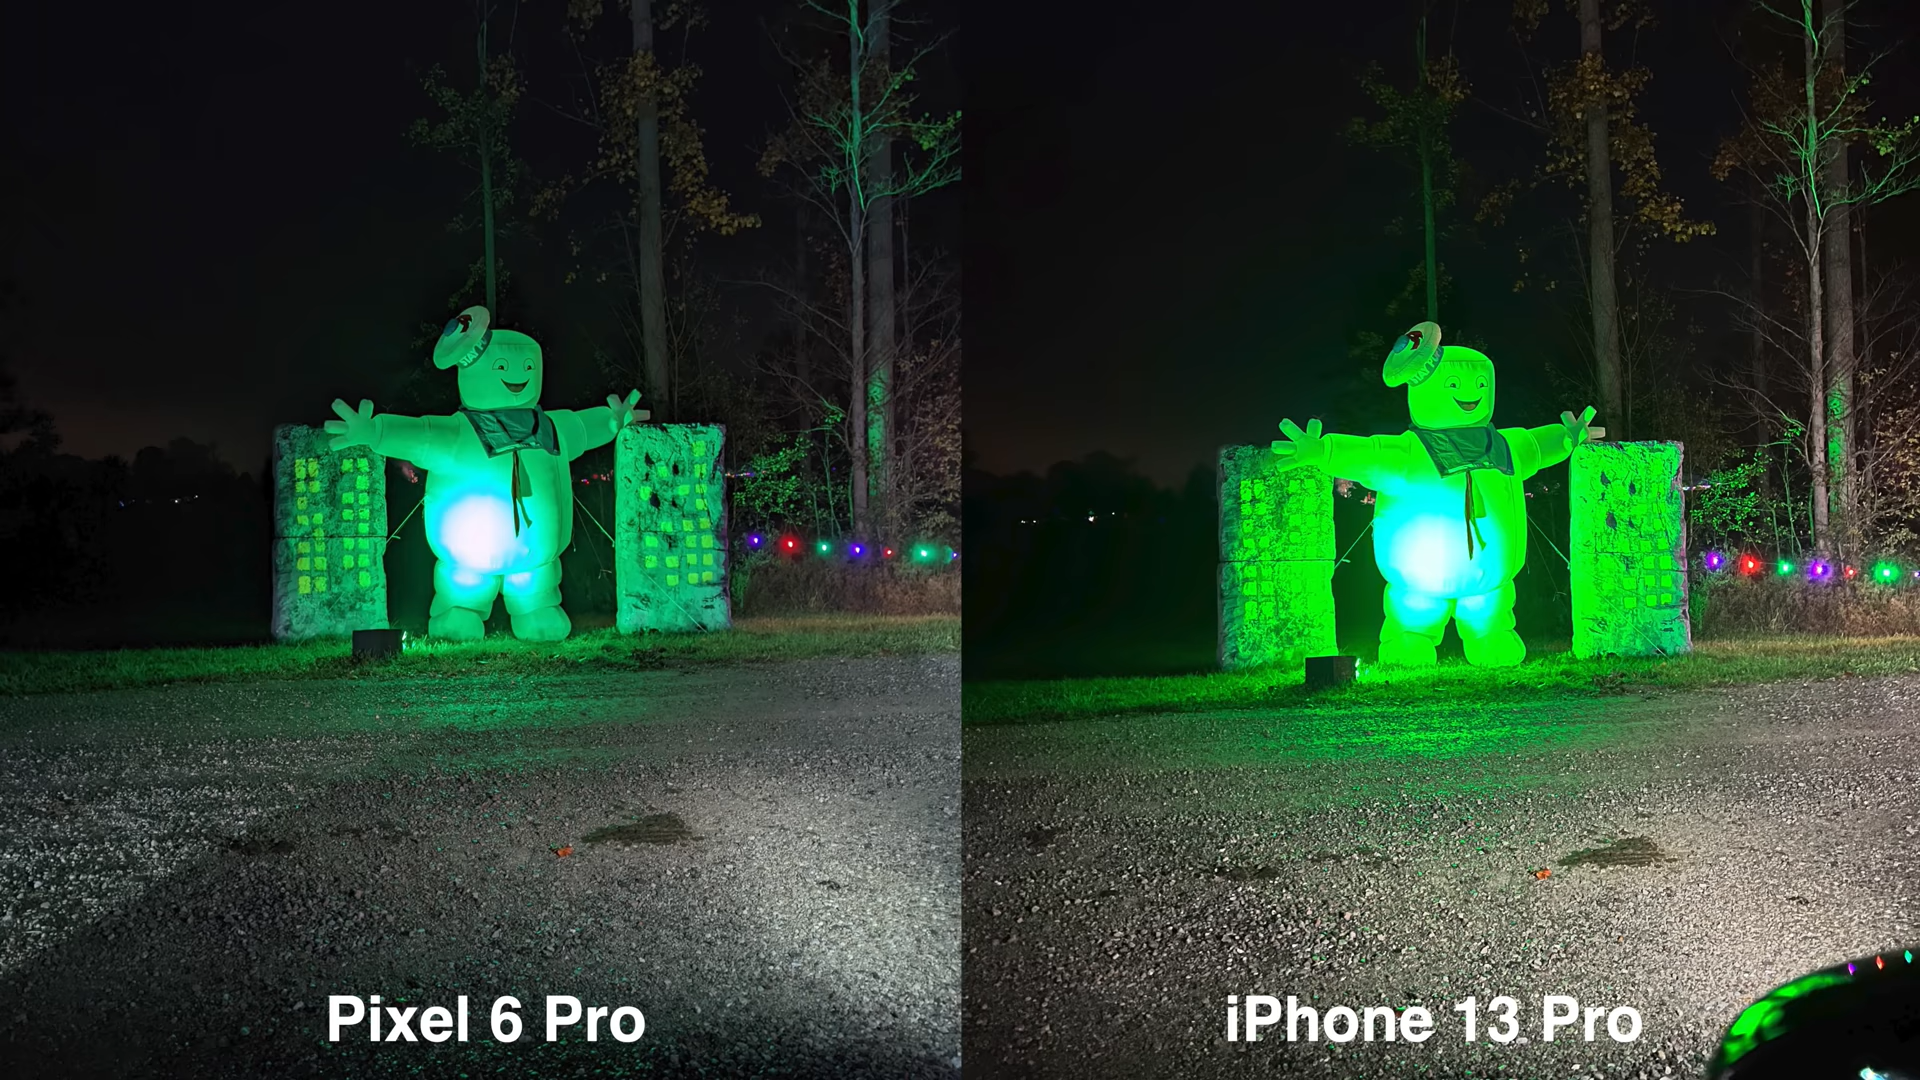 Comparação Pixel 6 Pro vs iPhone 13 Pro